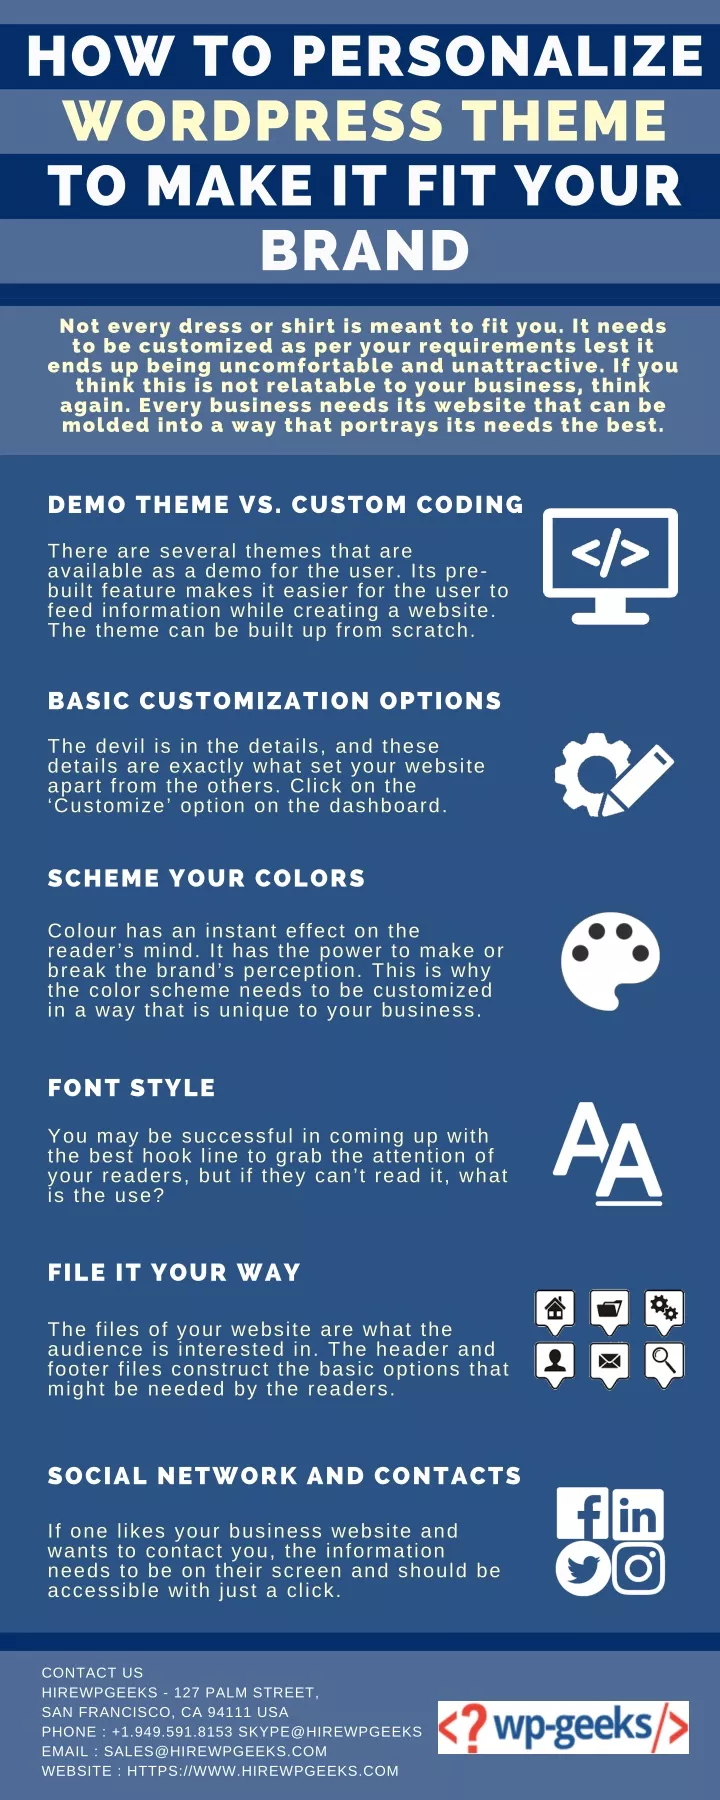 how to personalize wordpress theme to make